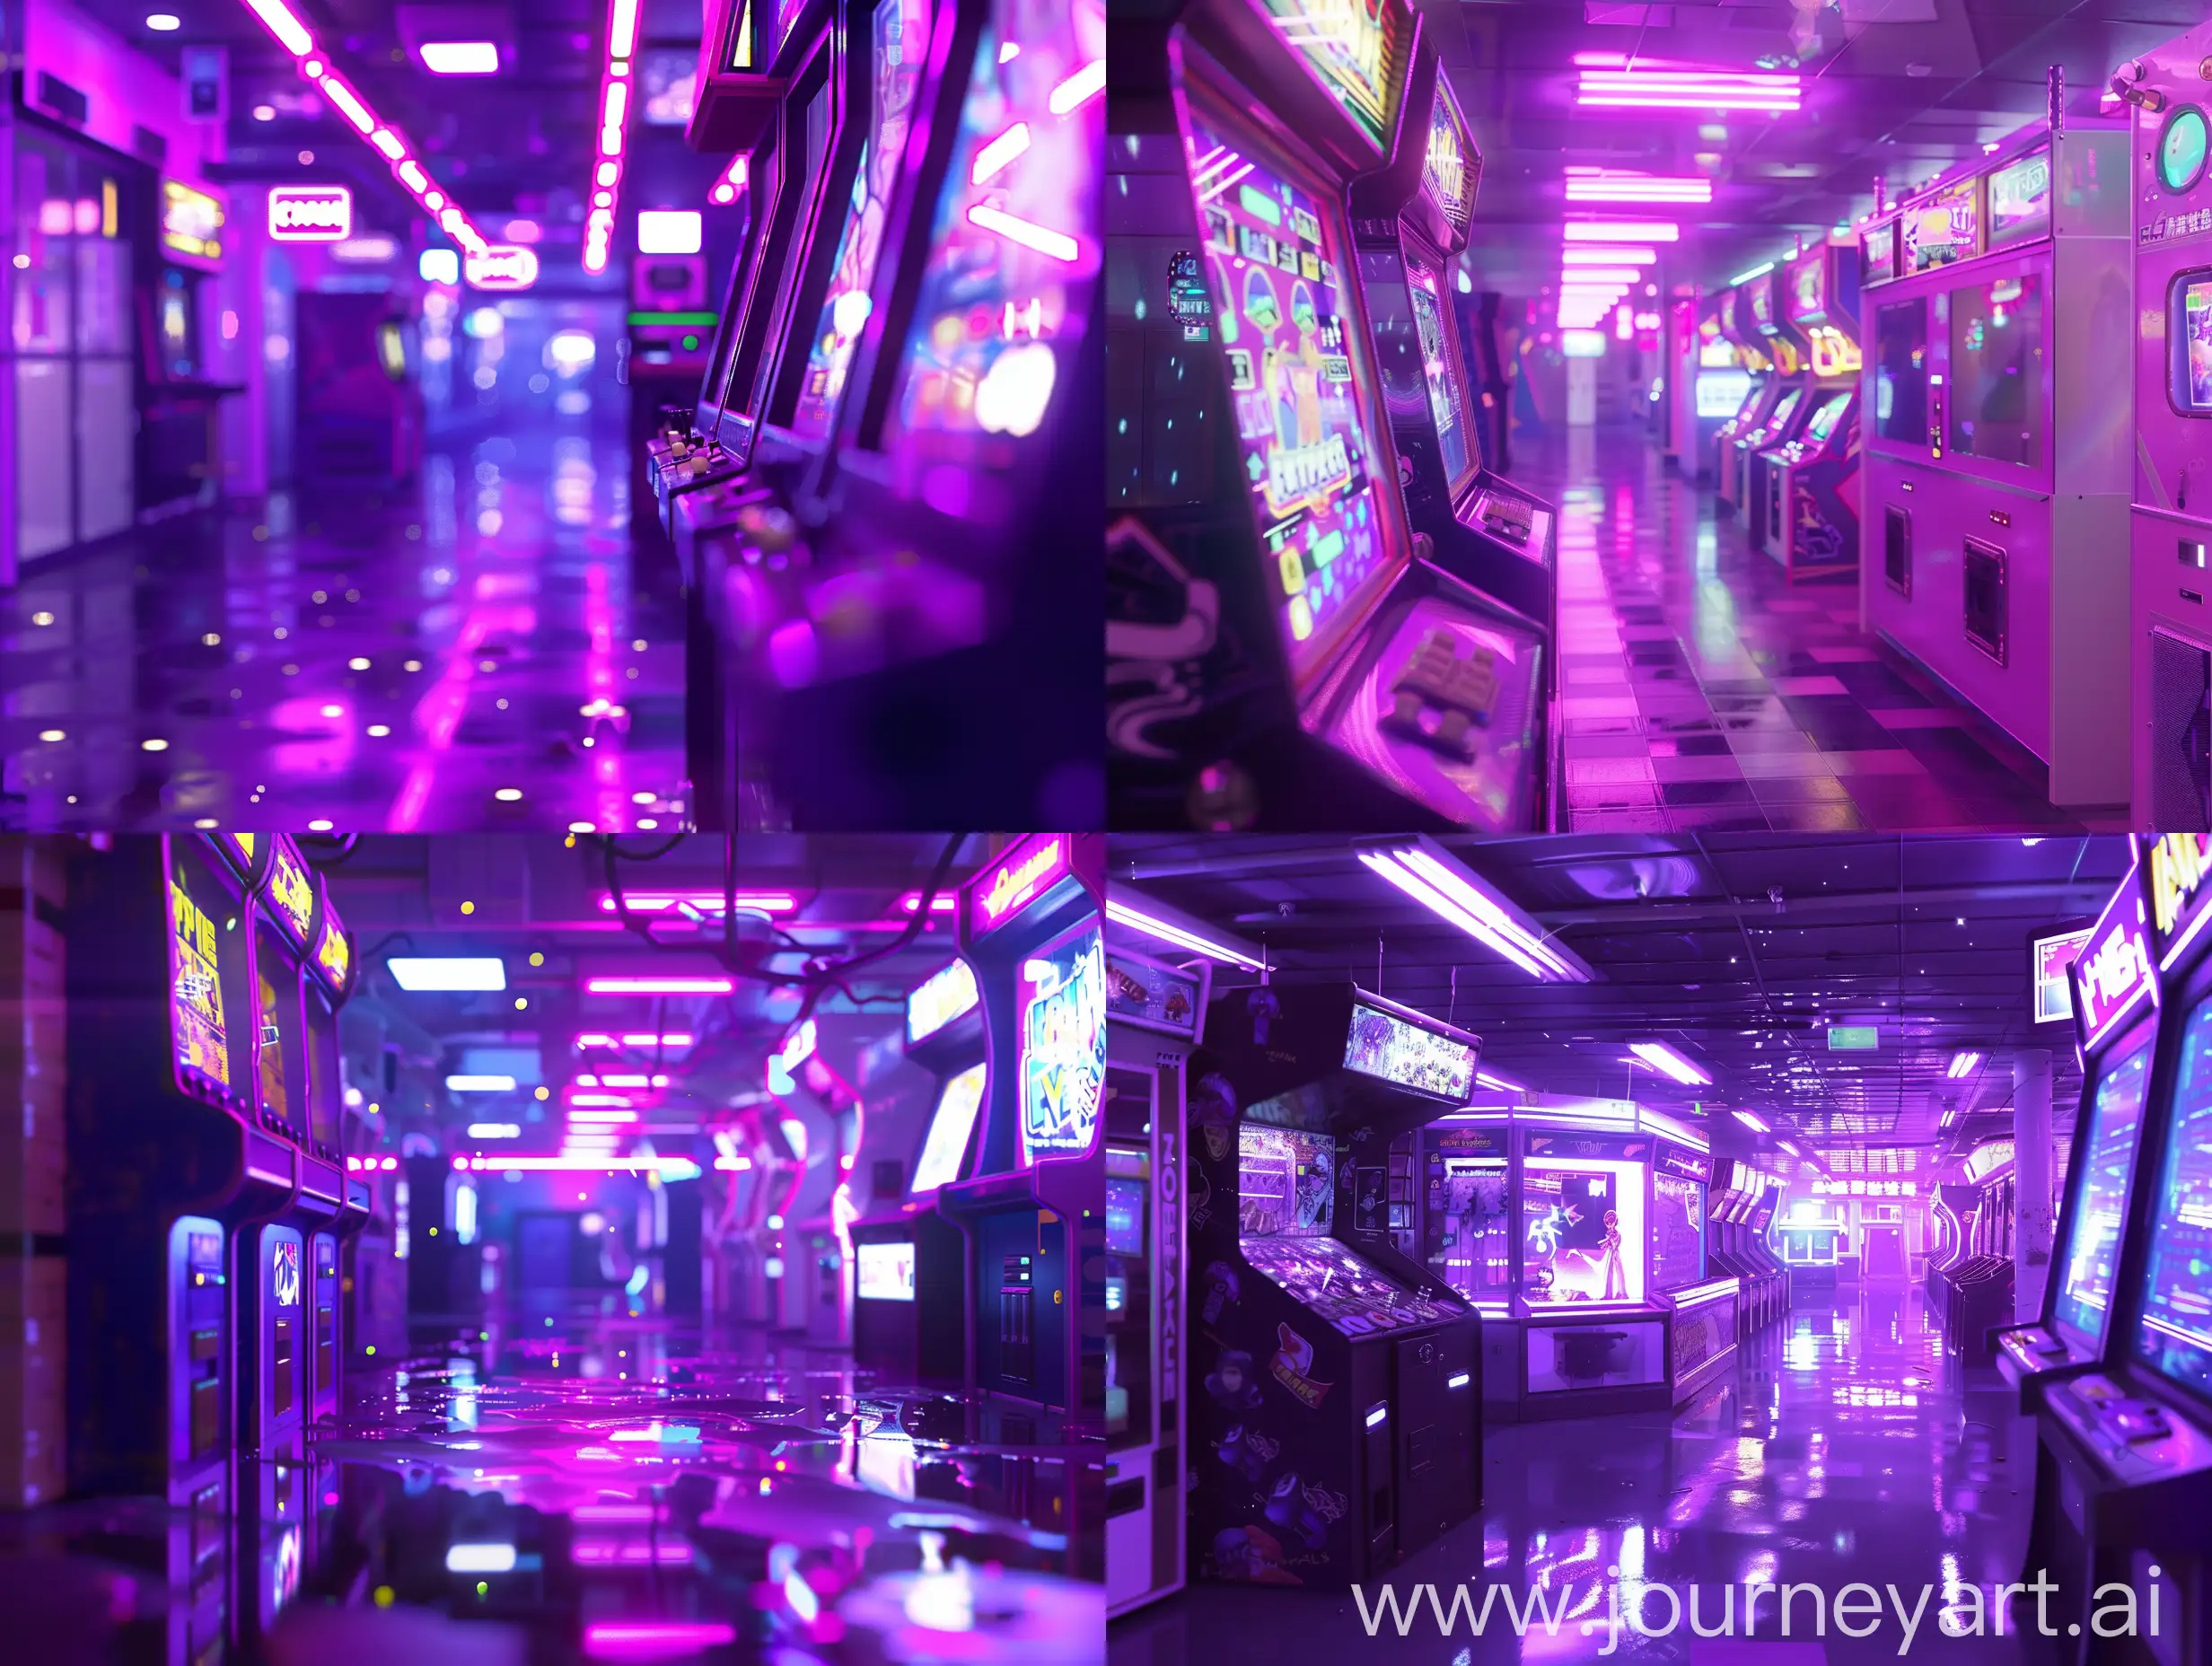 Futuristic-Neon-Cyberpunk-Arcade-Scene-in-HighDefinition-Anime-Style